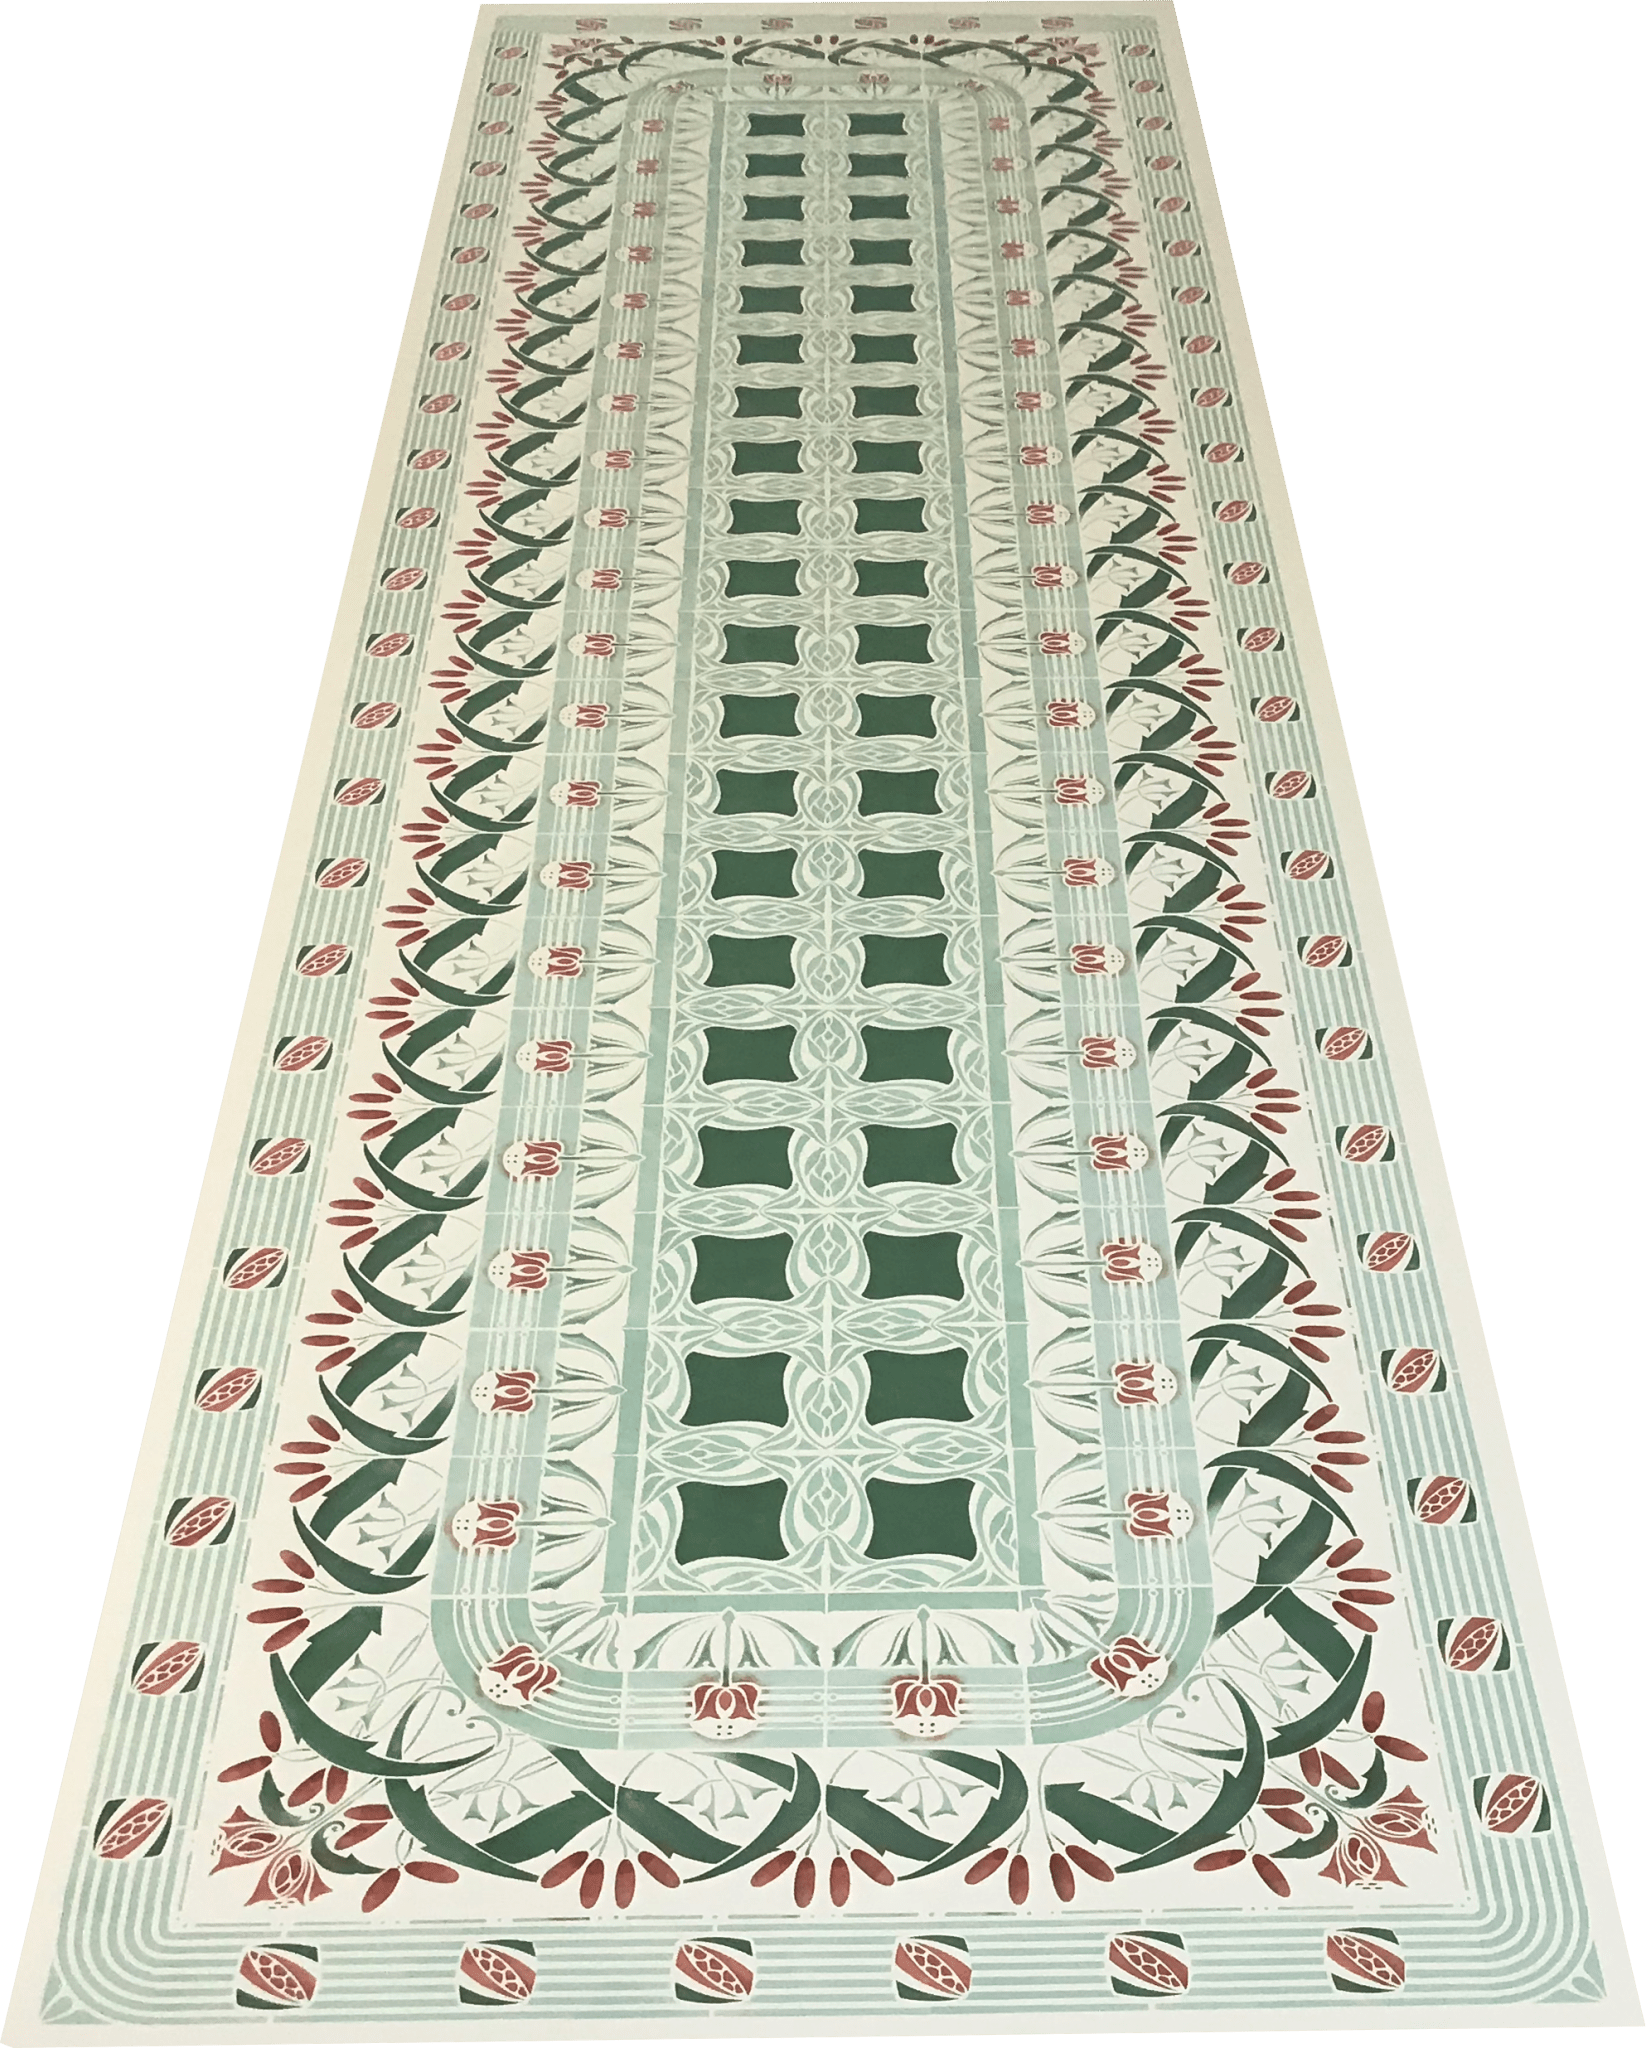 Full image of Wunderlich Floorcloth #7.